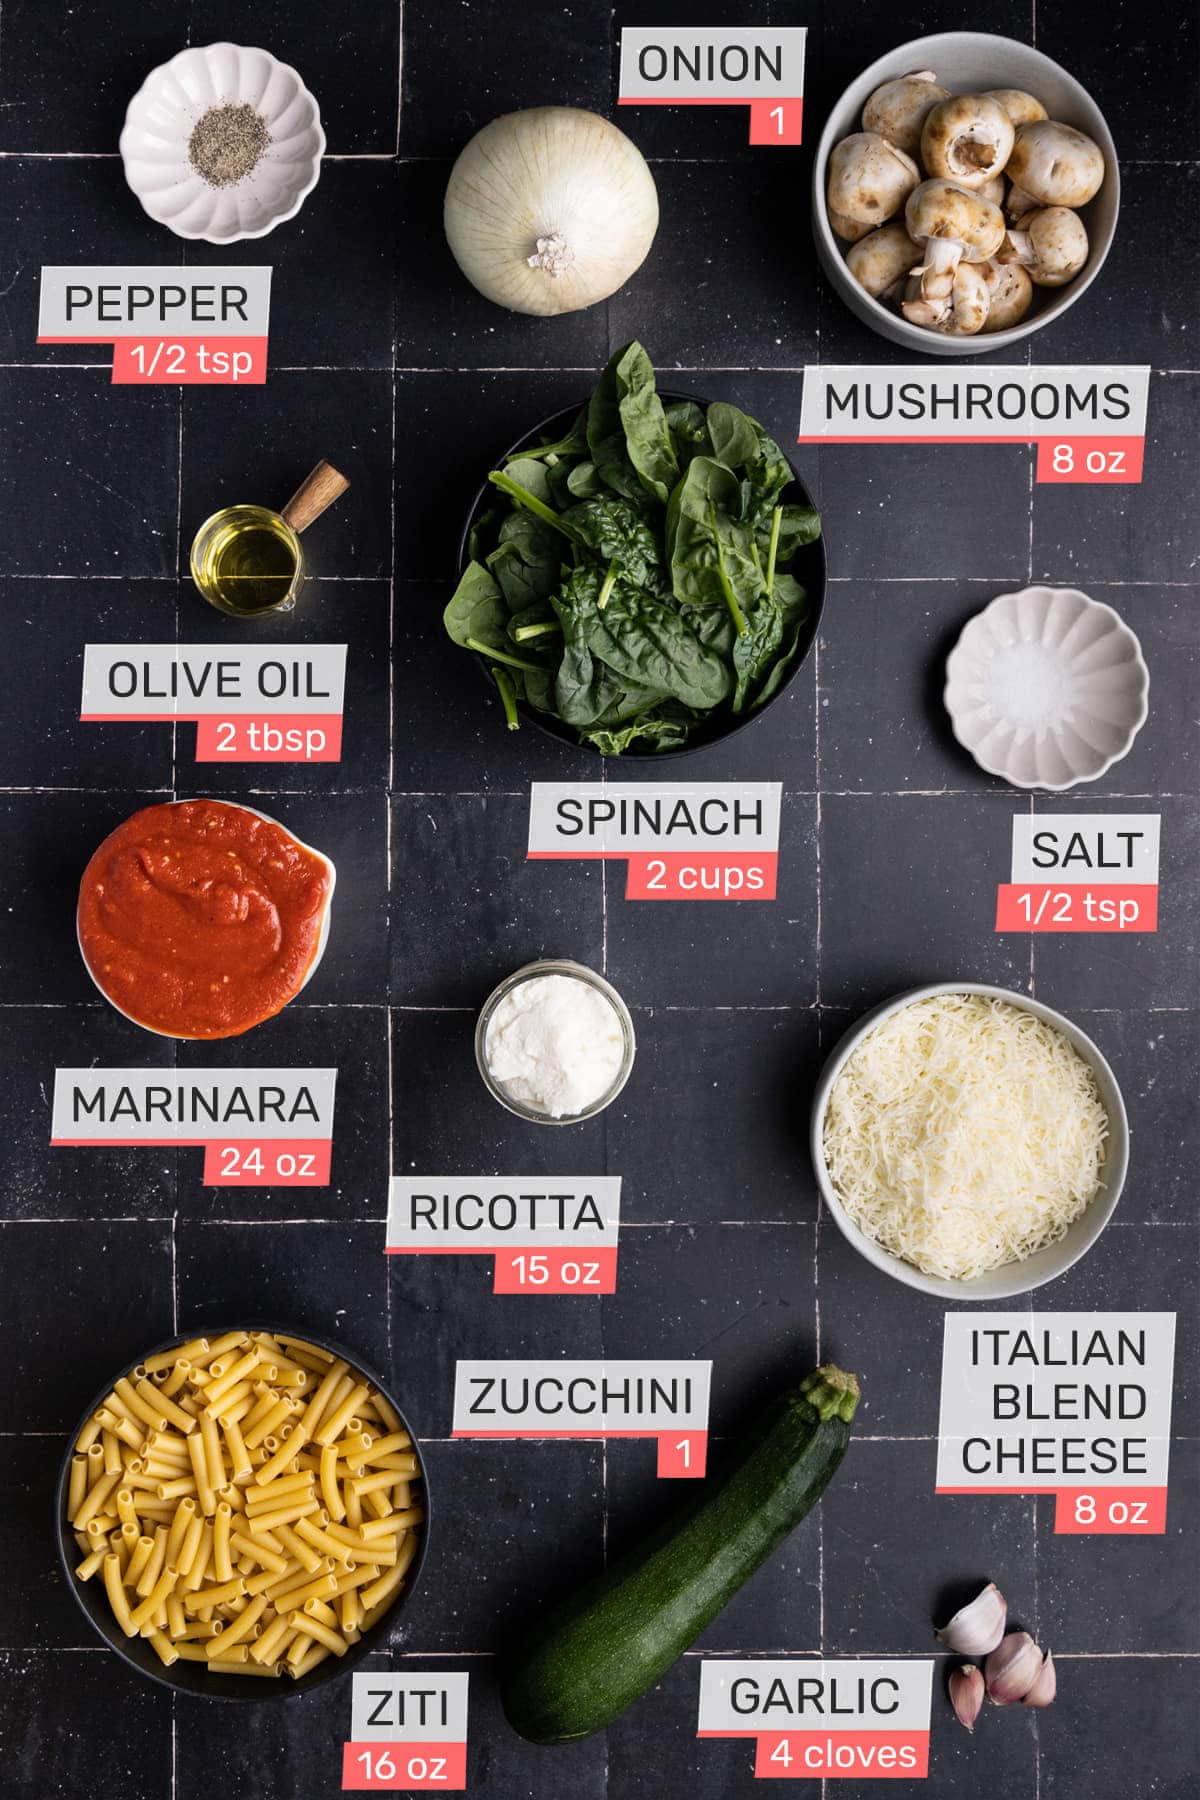 pepper, onion, mushrooms, olive oil, spinach, salt, marinara, ricotta, zucchini, Italian blend cheese, ziti, garlic